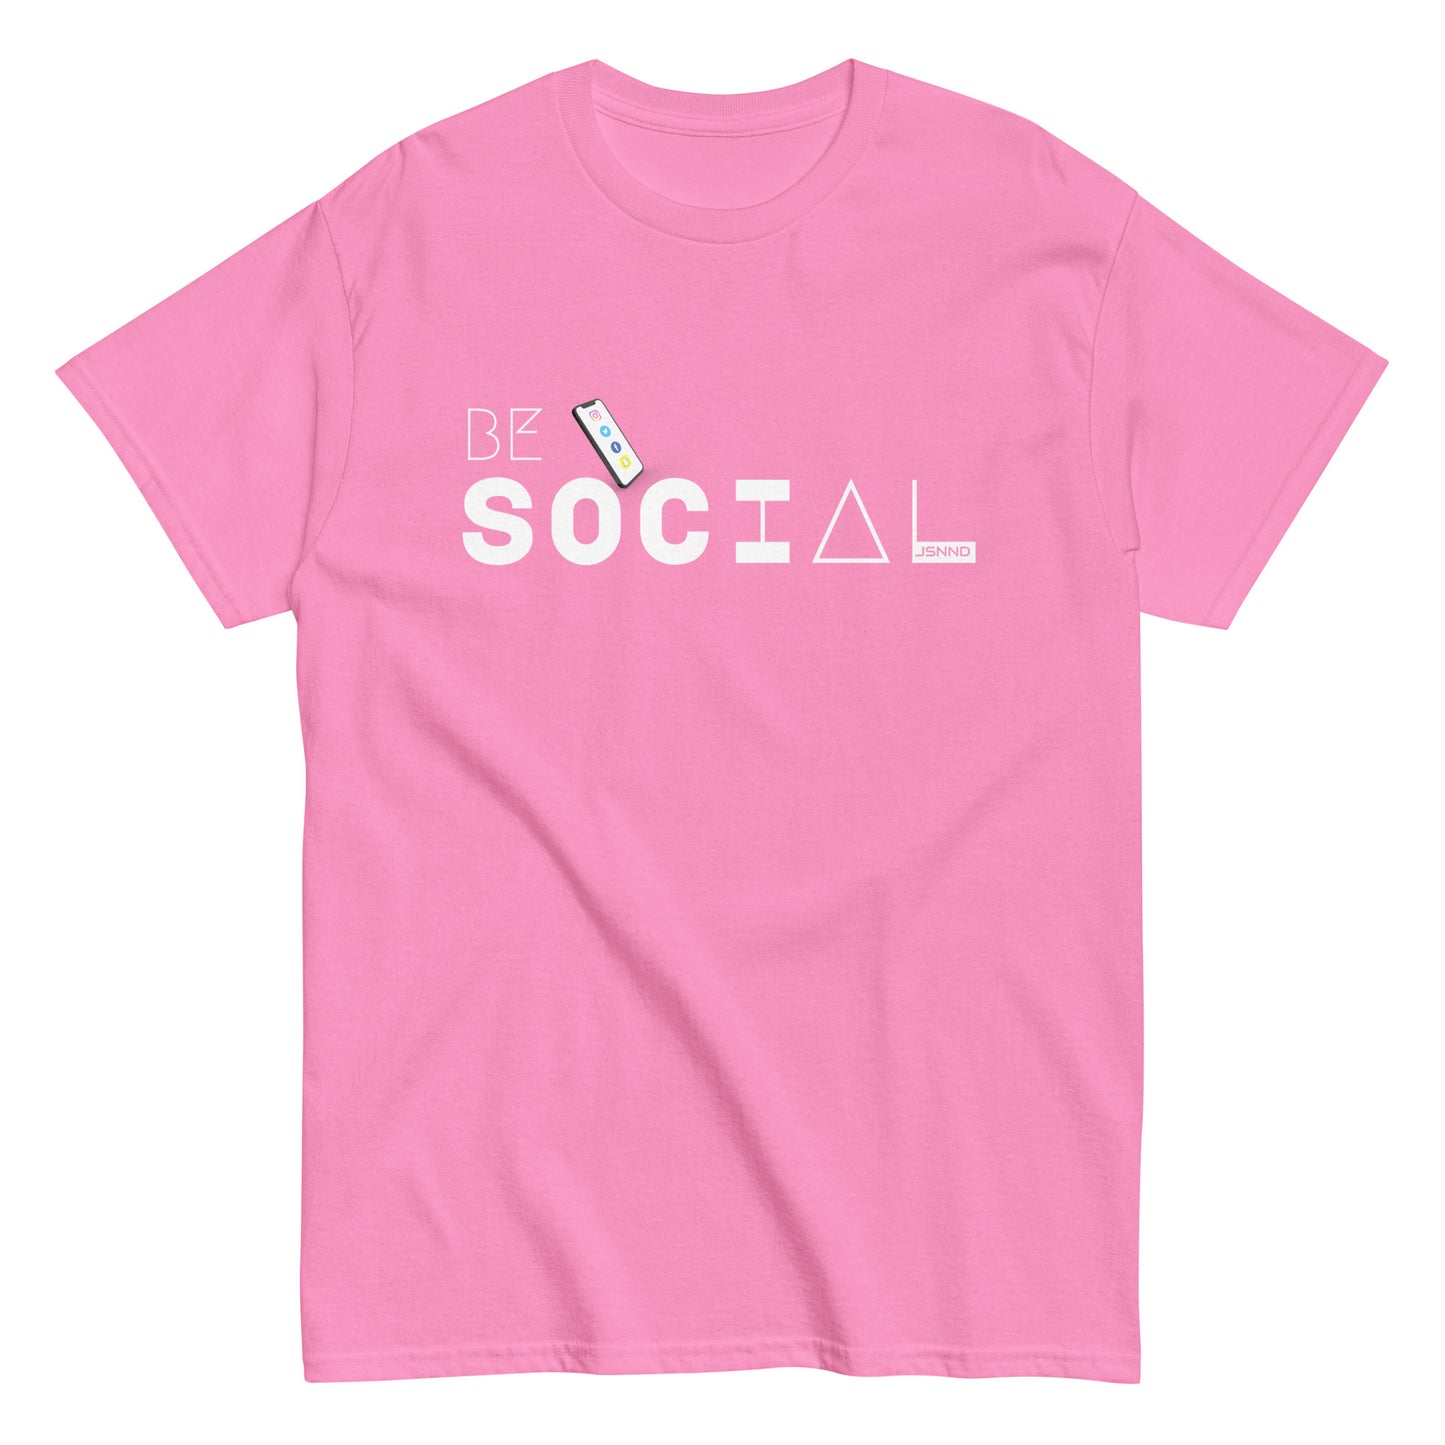 BE SOCIAL T-shirt